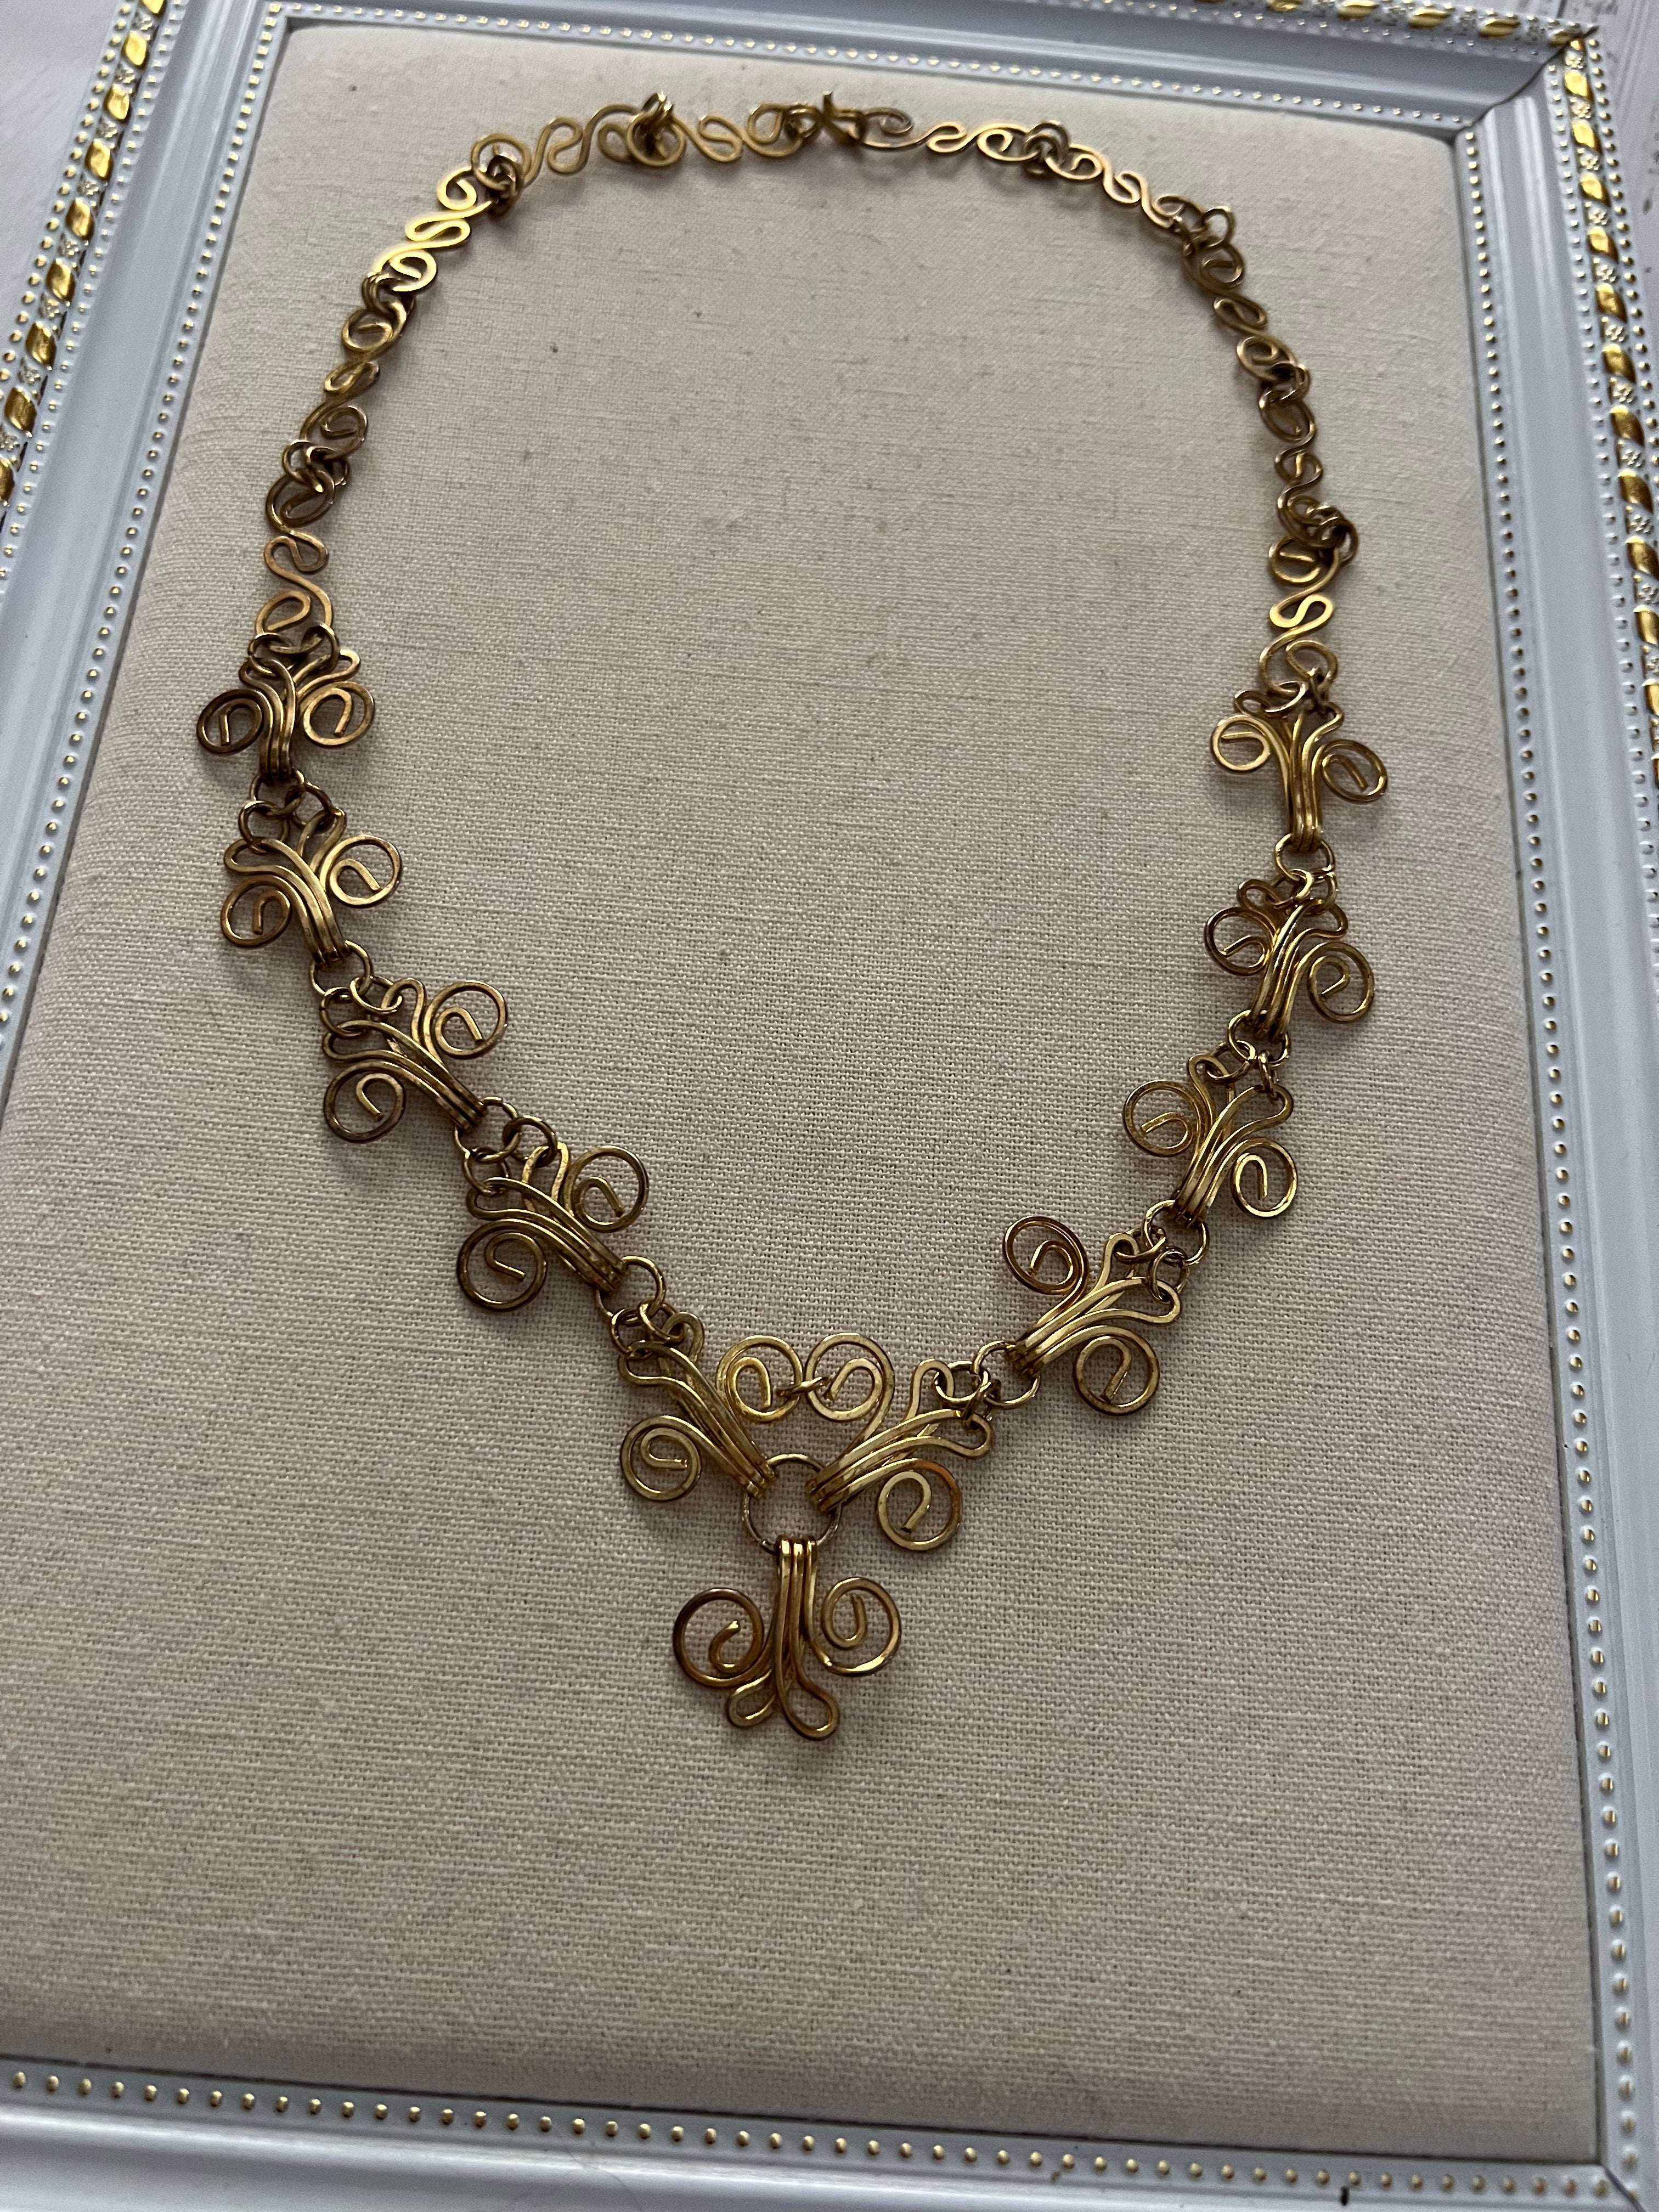 Vintage Dainty Gold Necklace